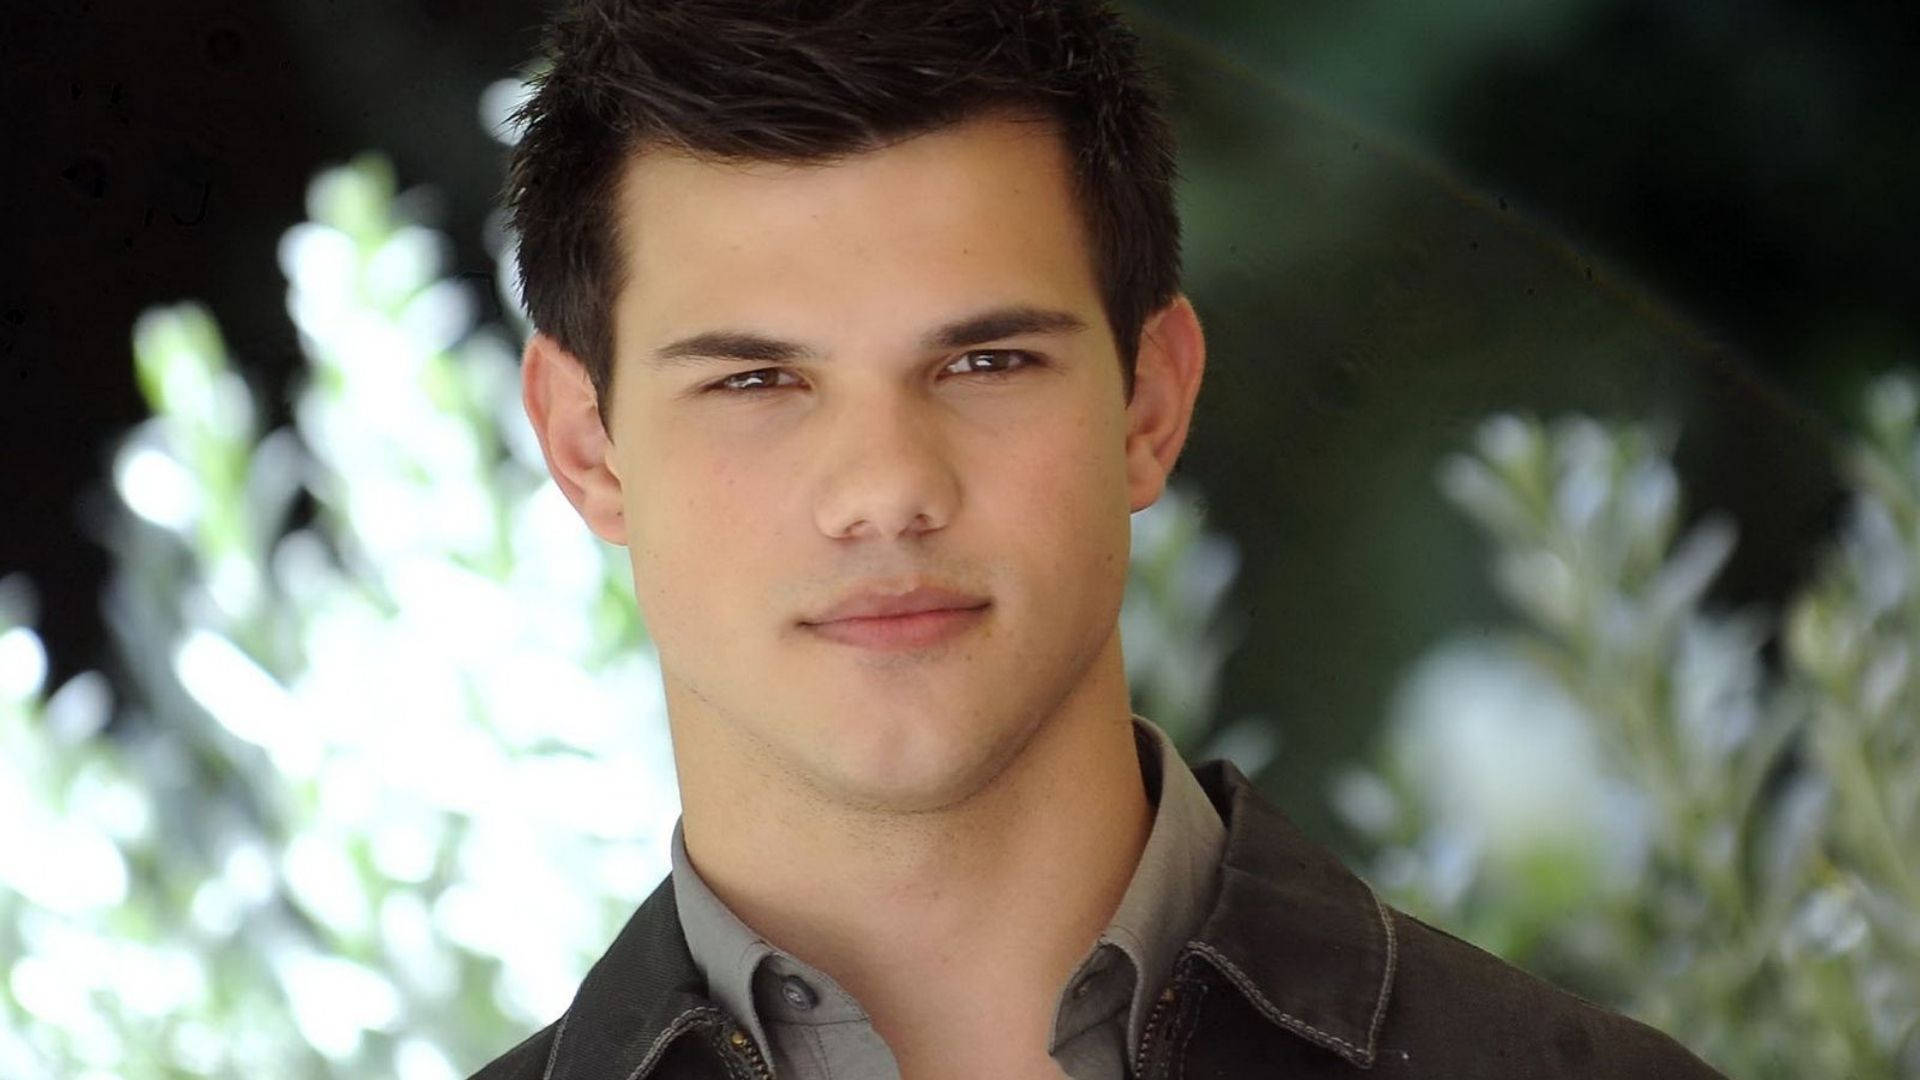 Hunk Actor Taylor Lautner Background